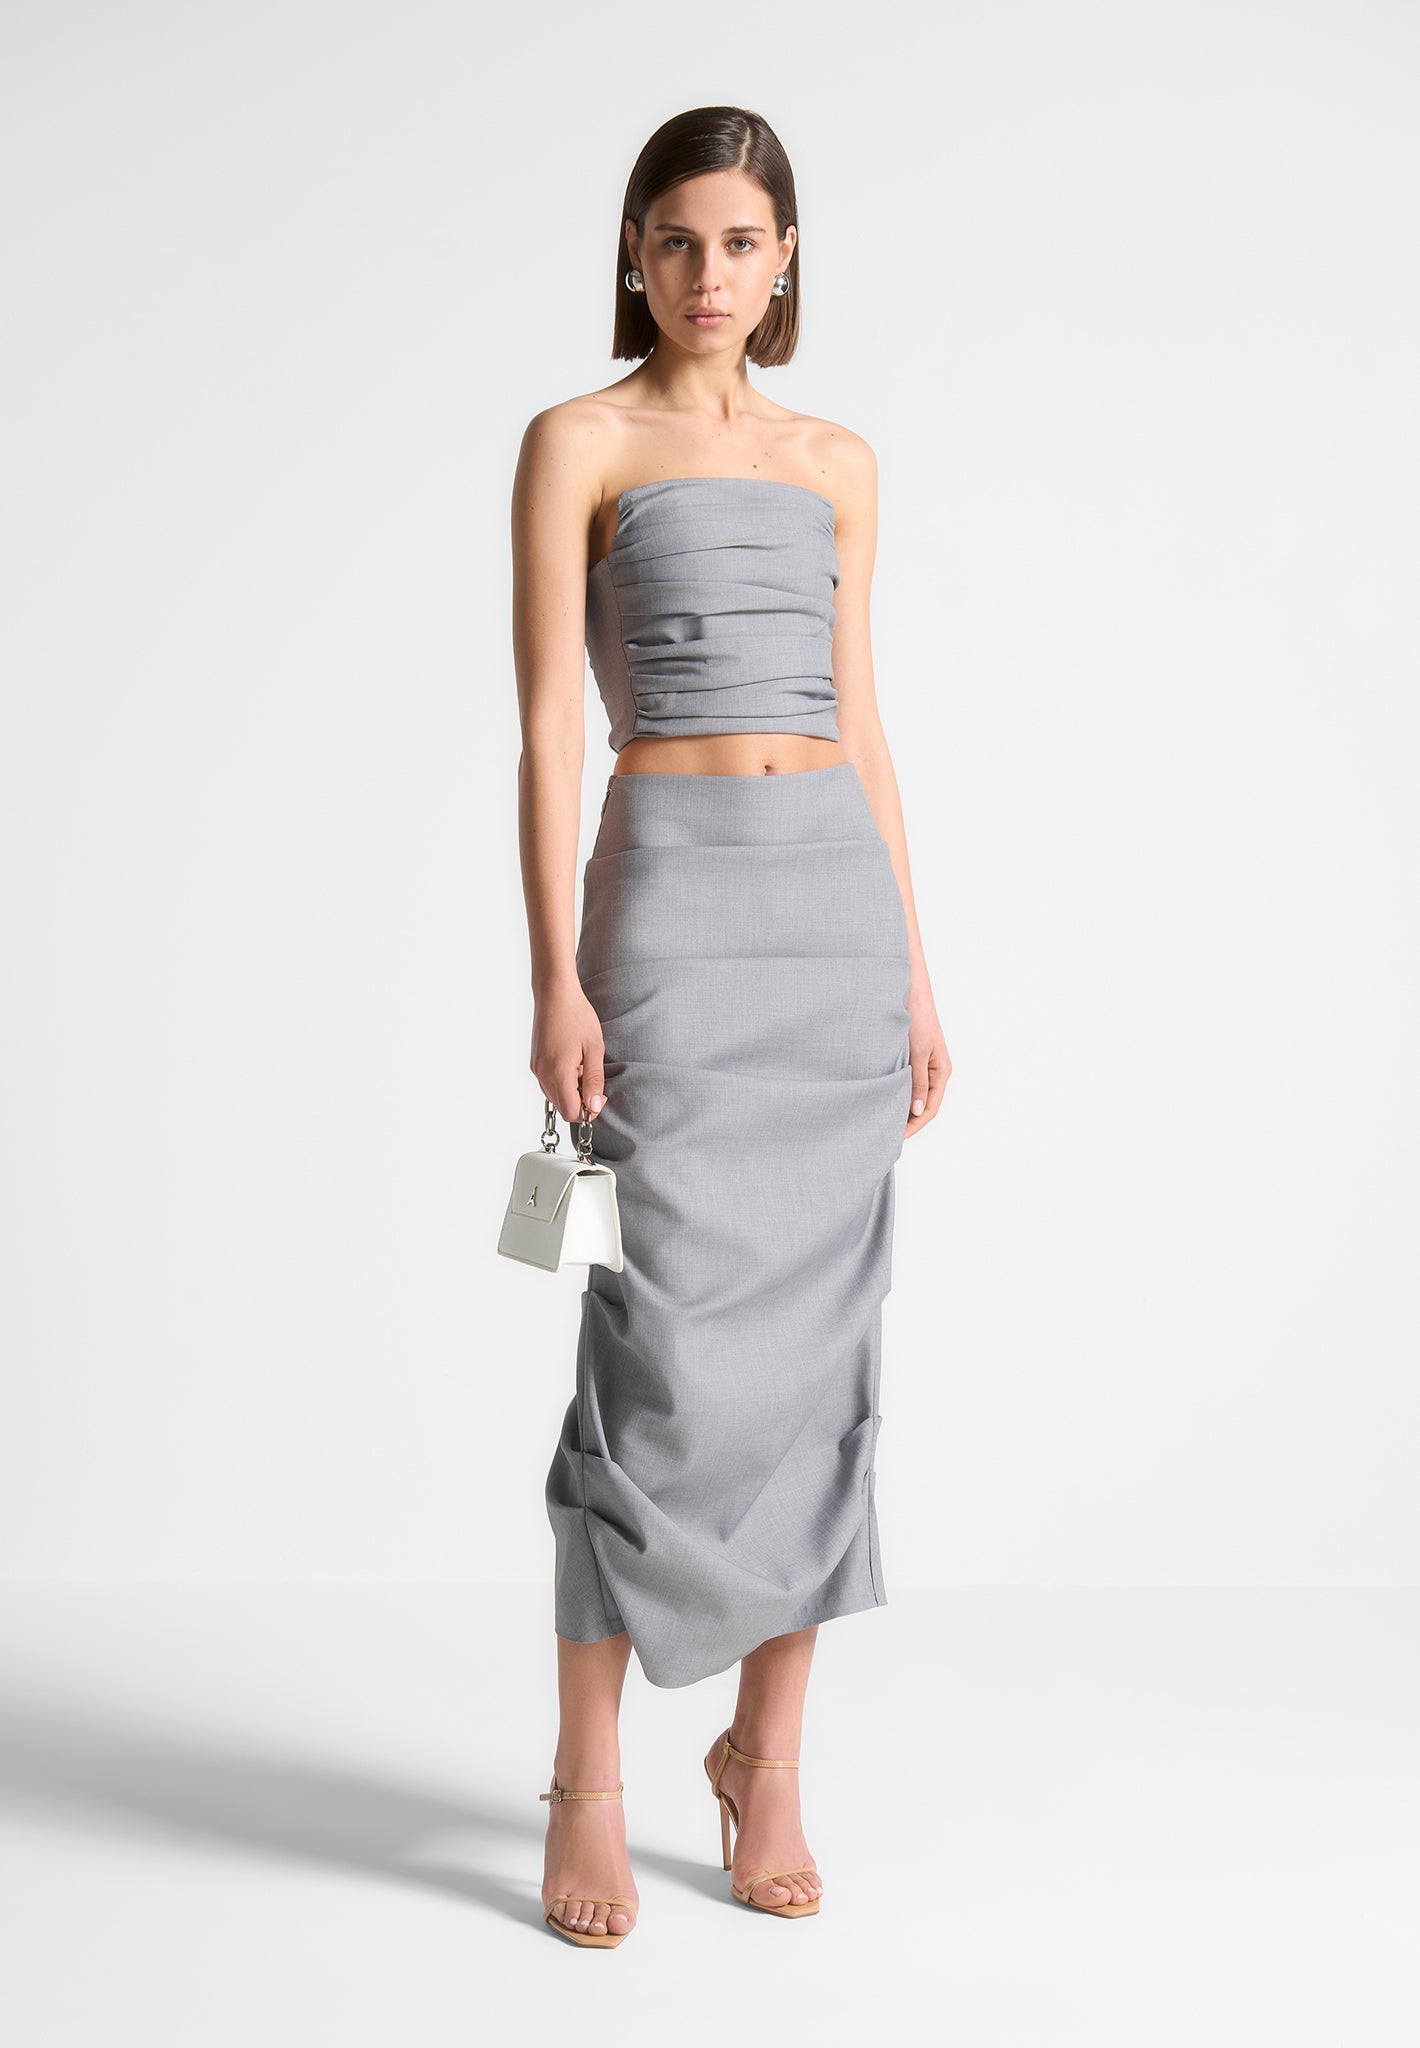 tailored-tacked-midaxi-skirt-grey